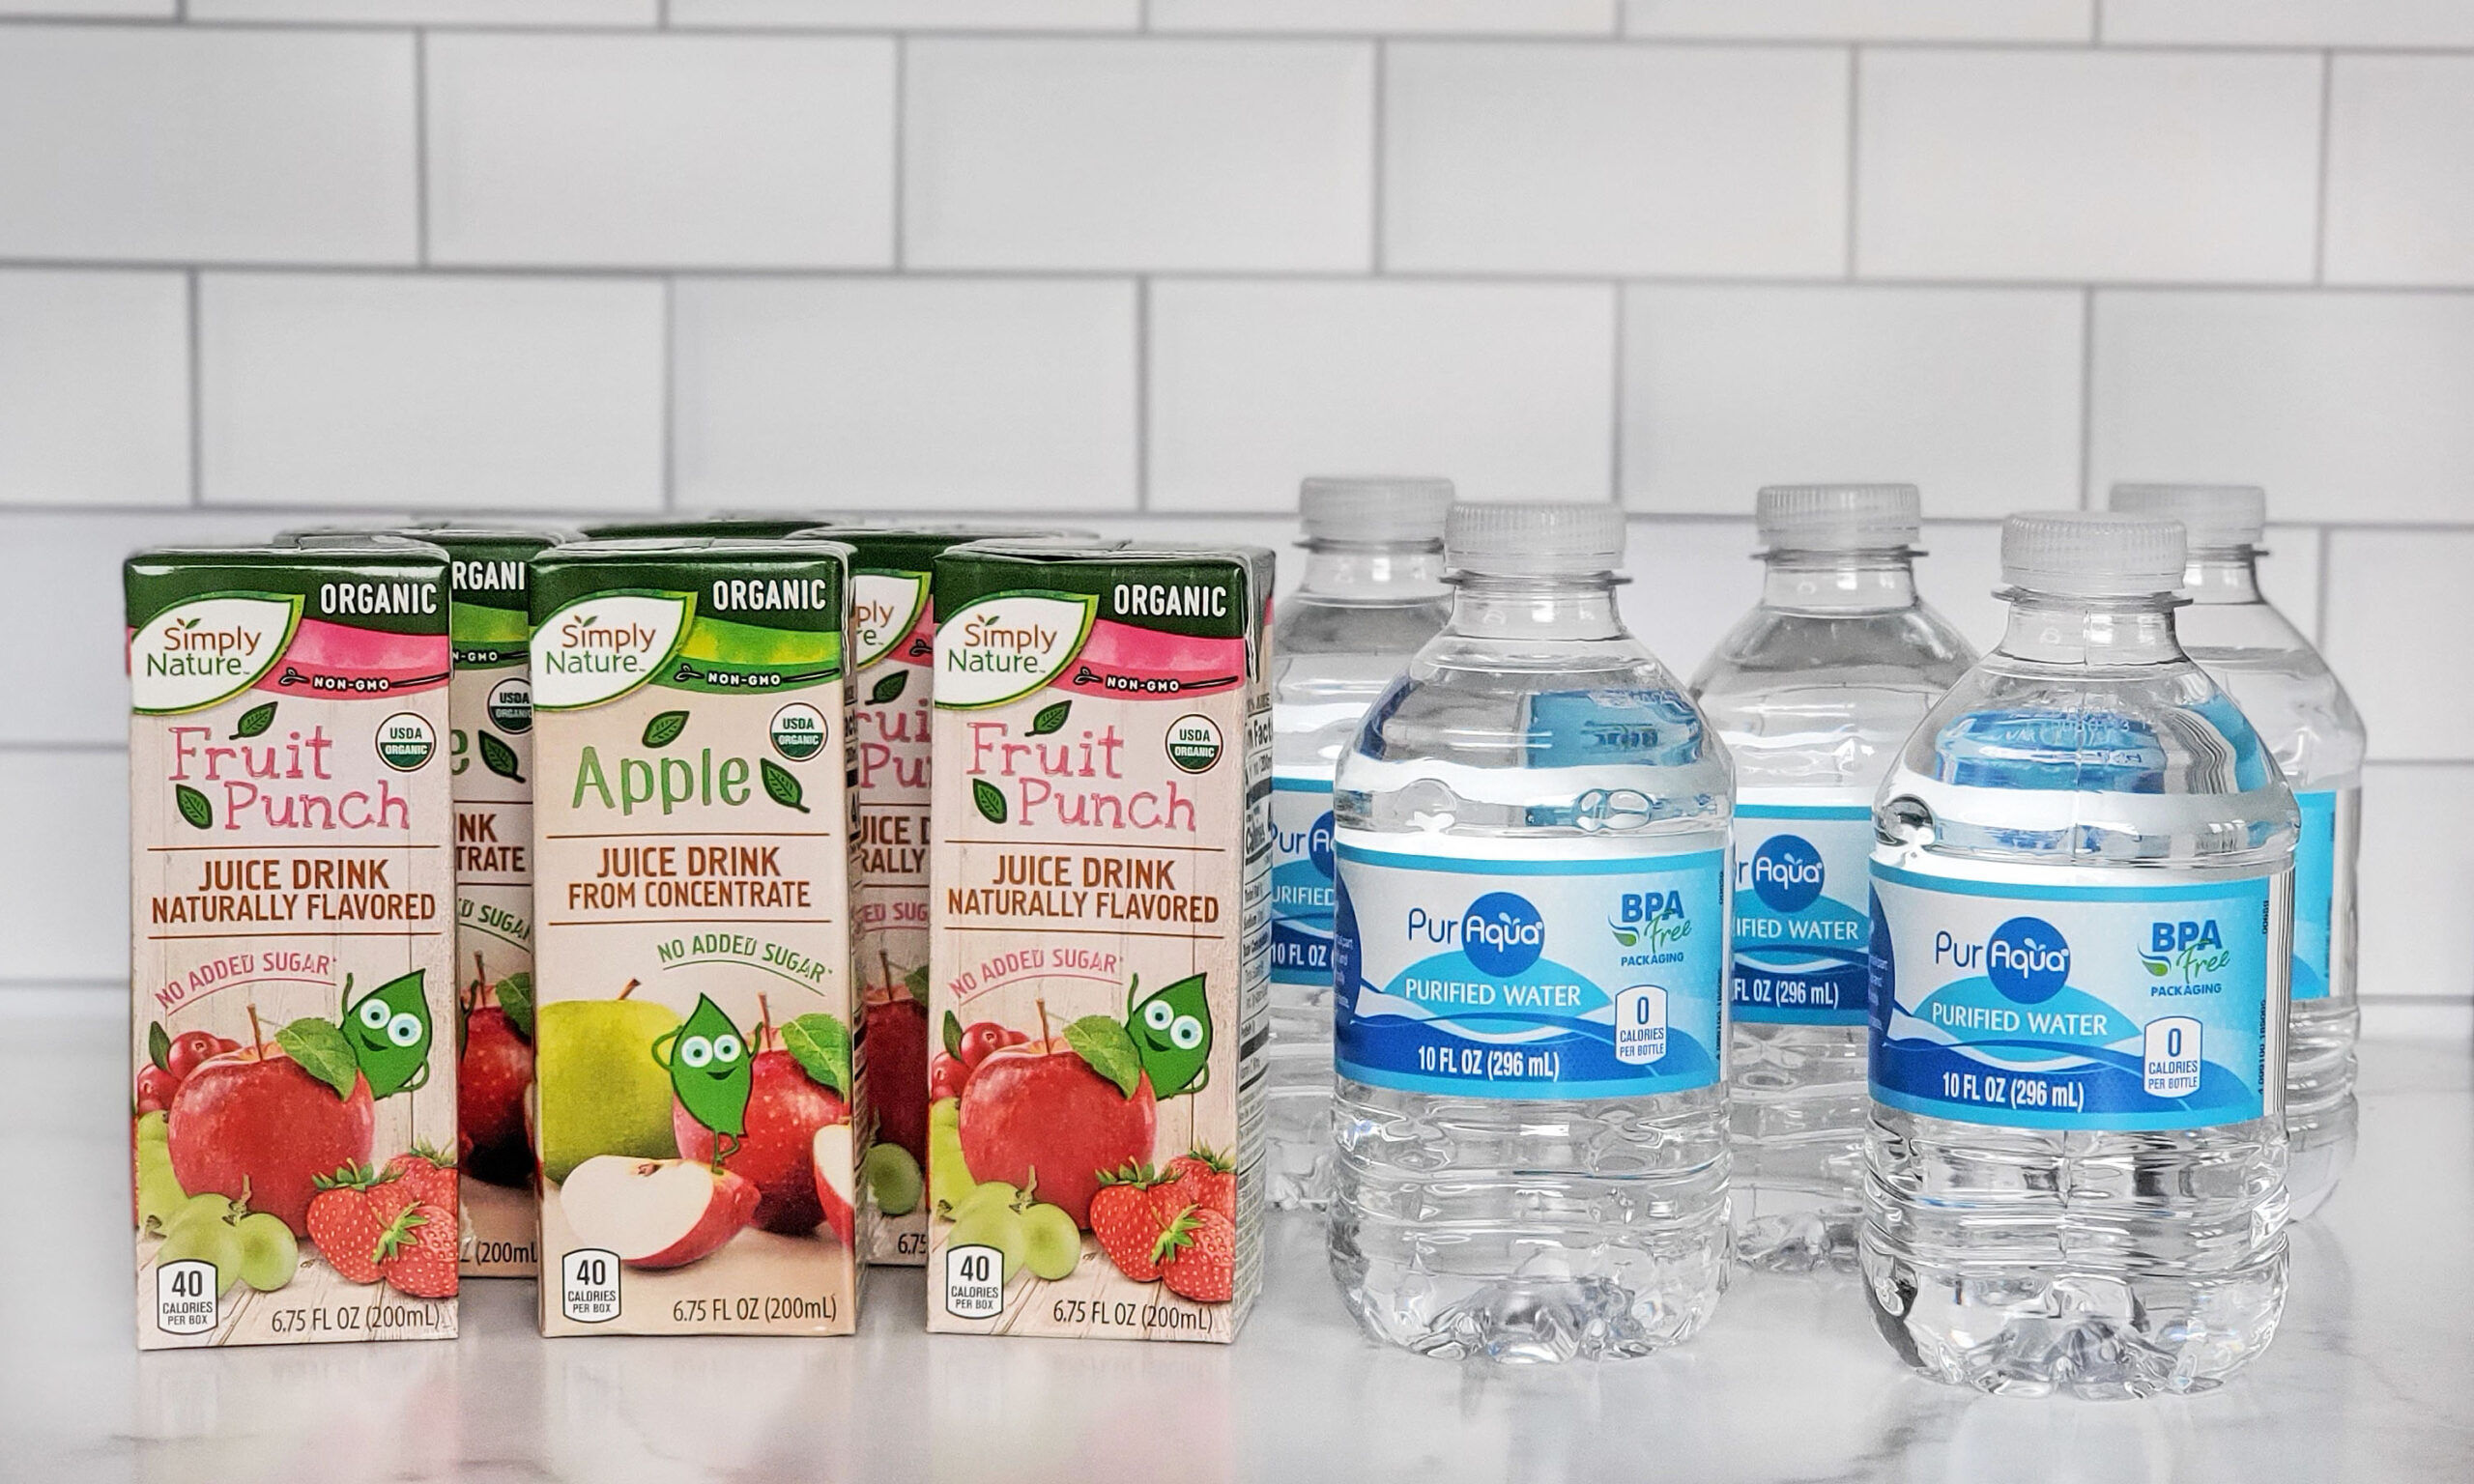 aldi simply nature organic juice boxes and puraqua water bottles